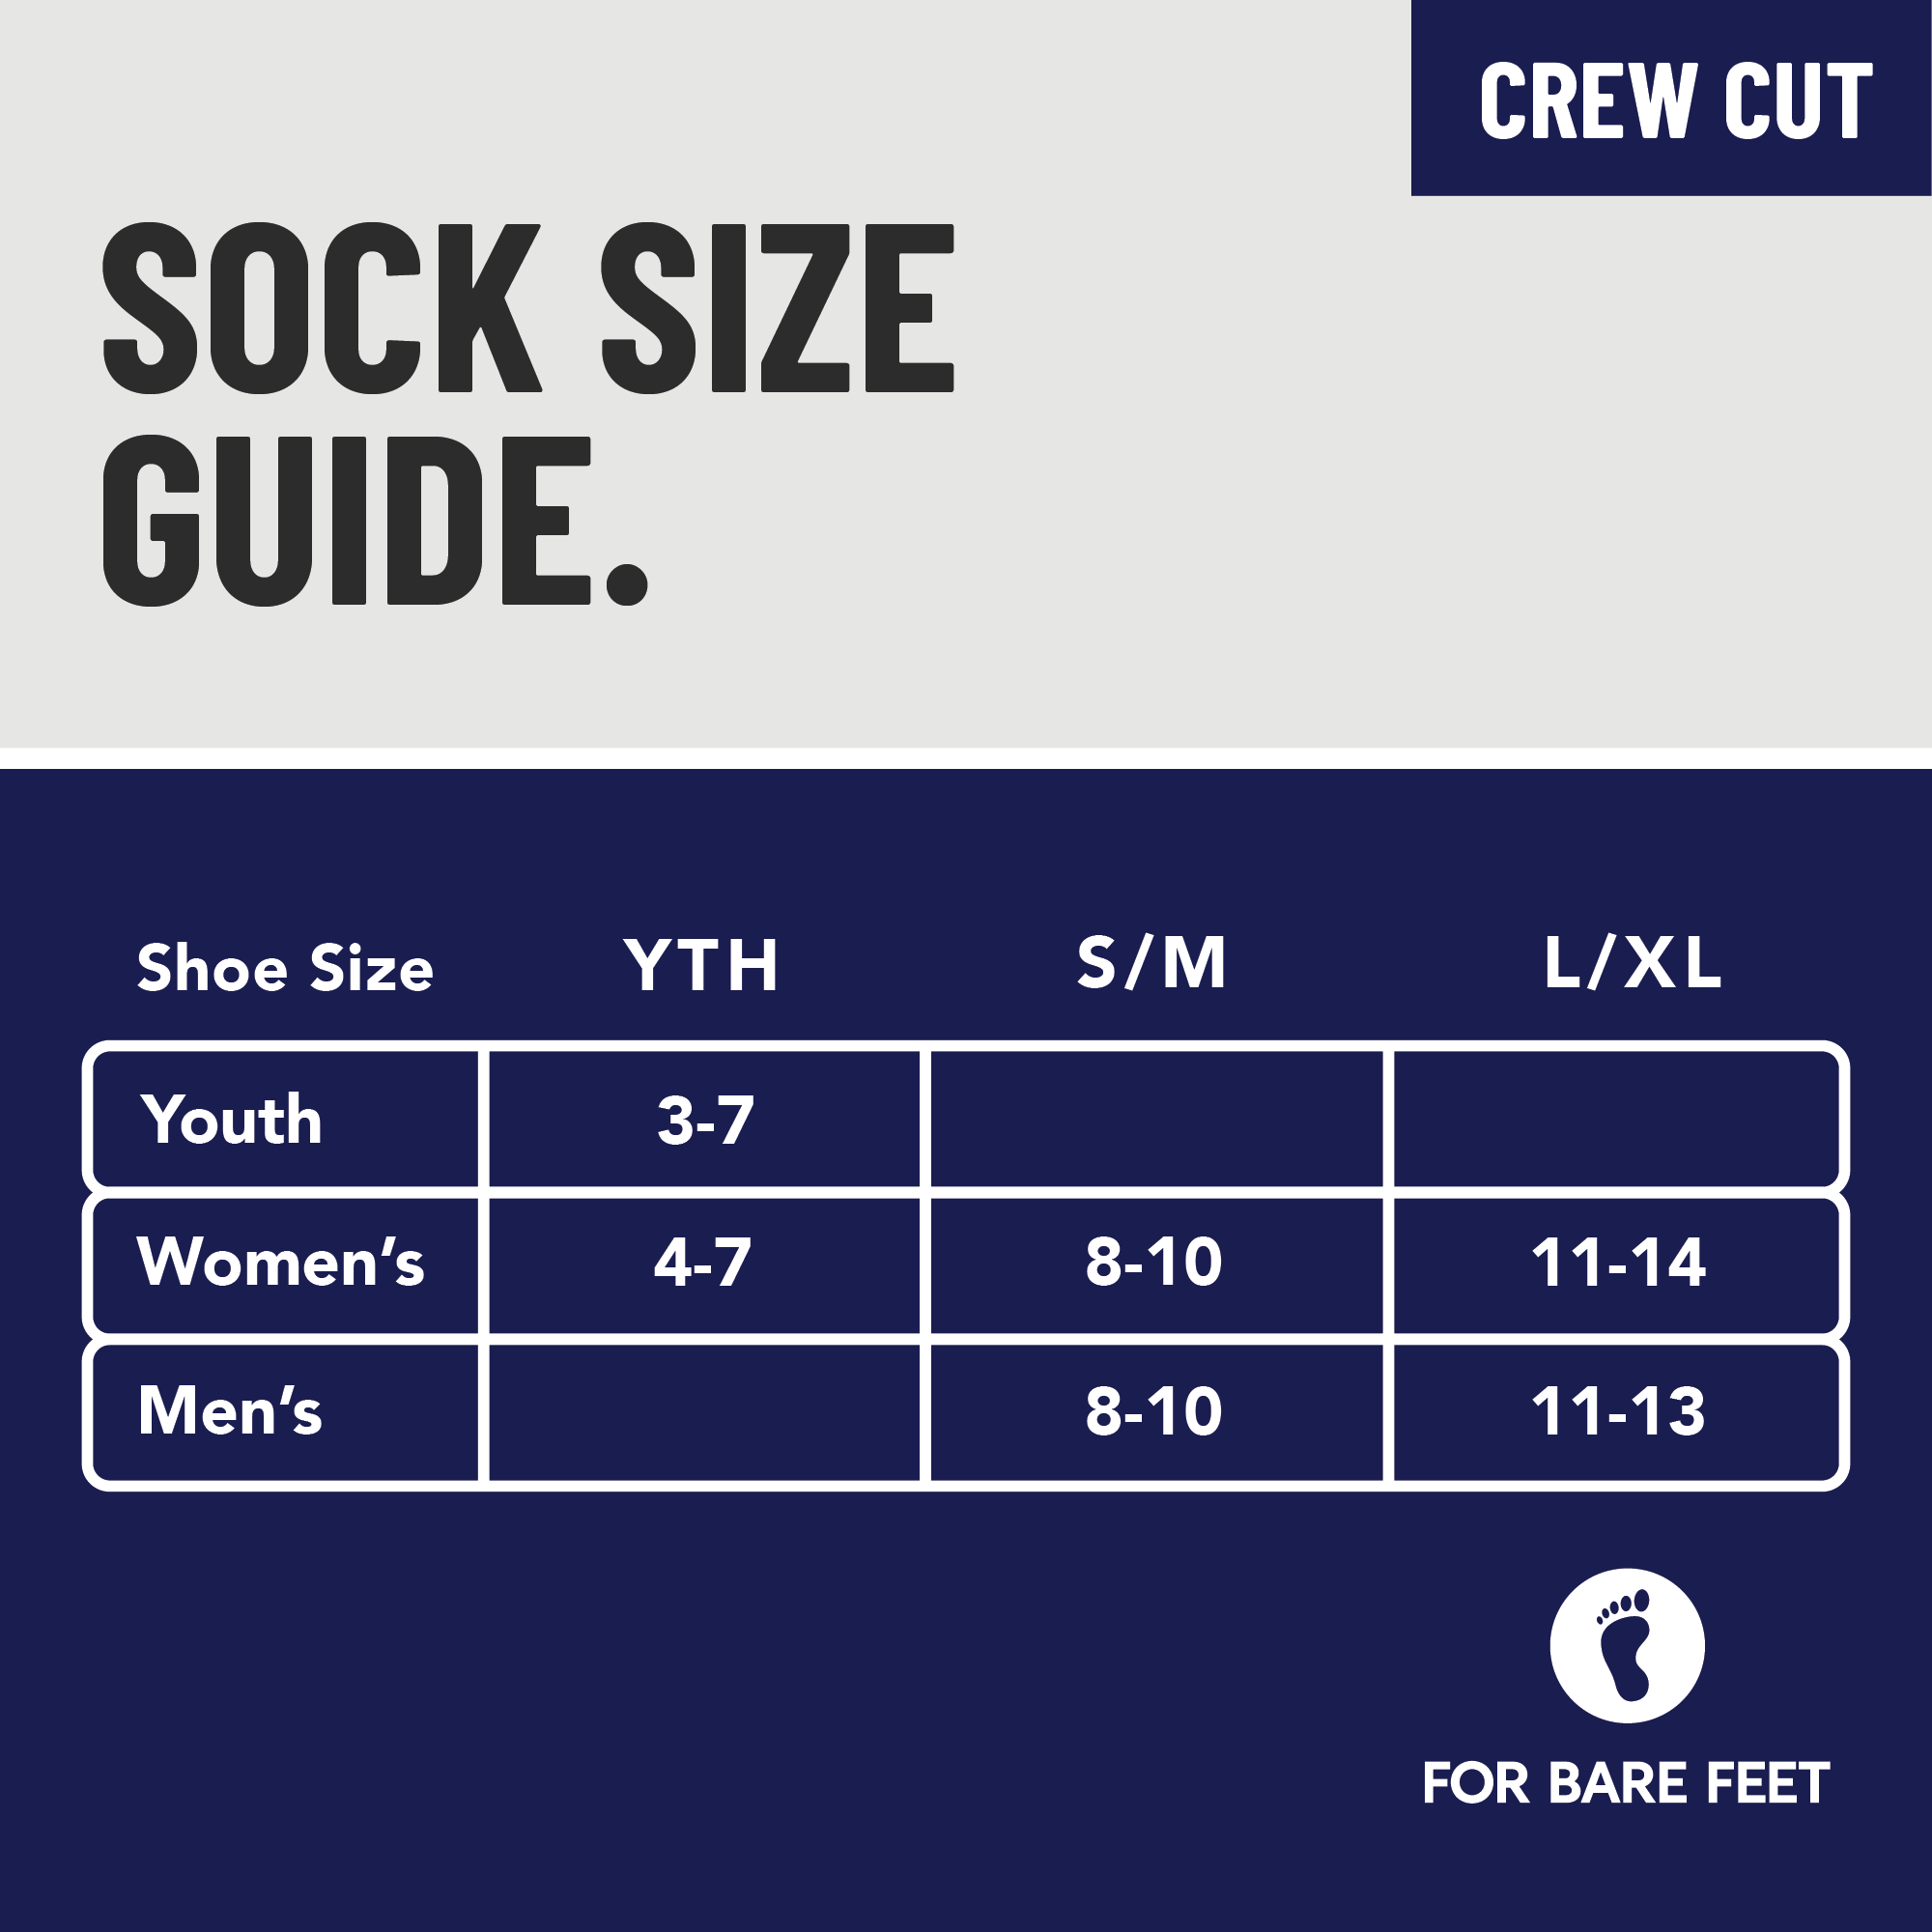 Michigan Wolverines Breakout Premium Crew Socks